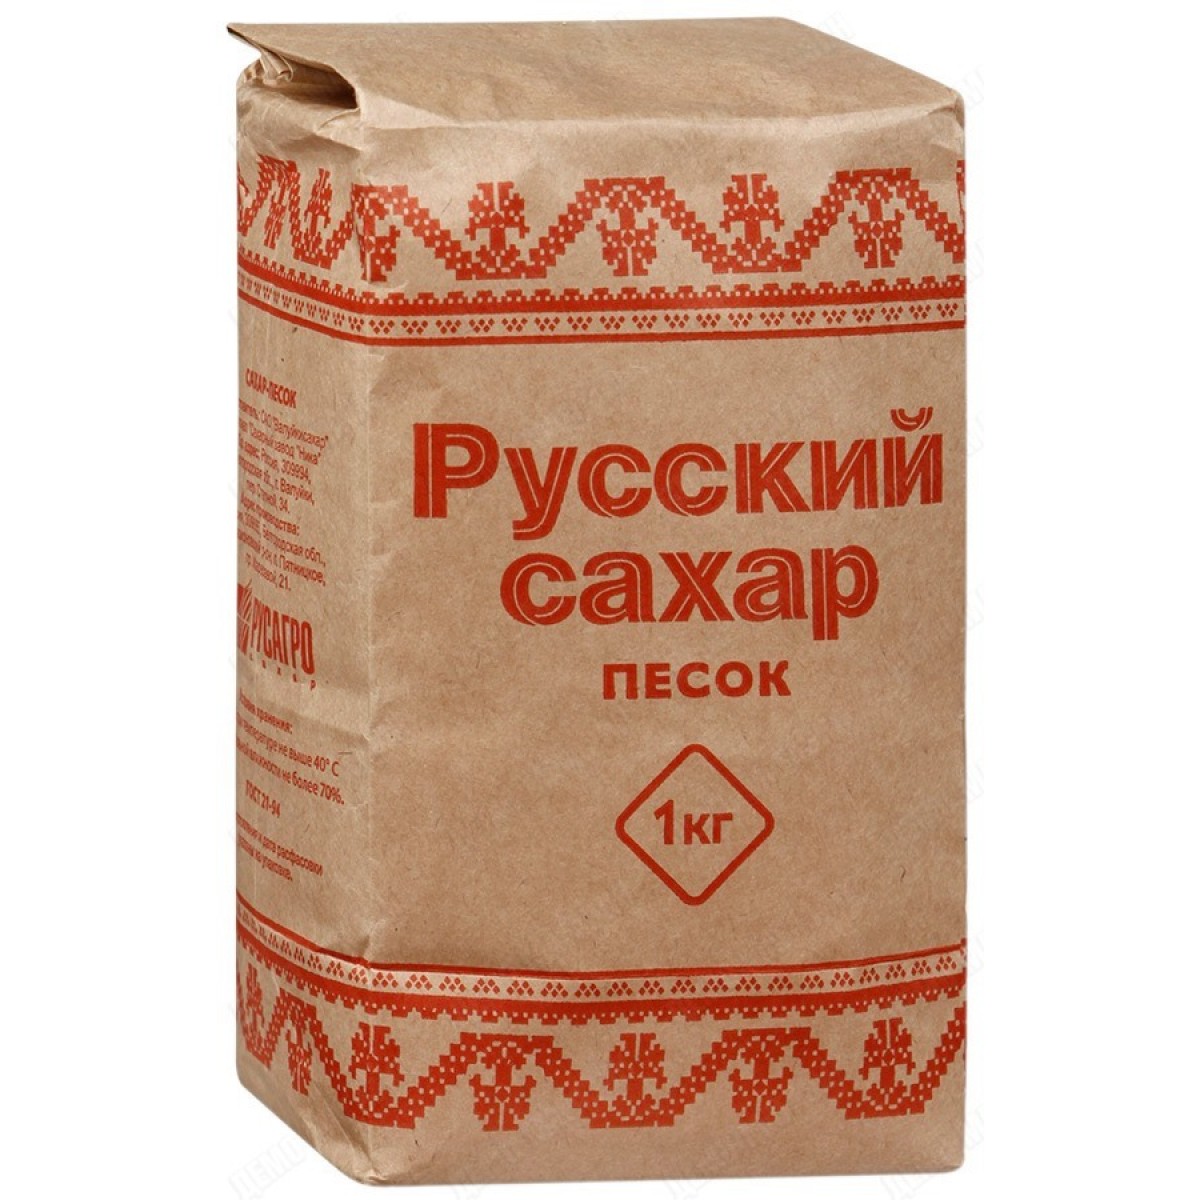 Где Купить Сахар В Омске